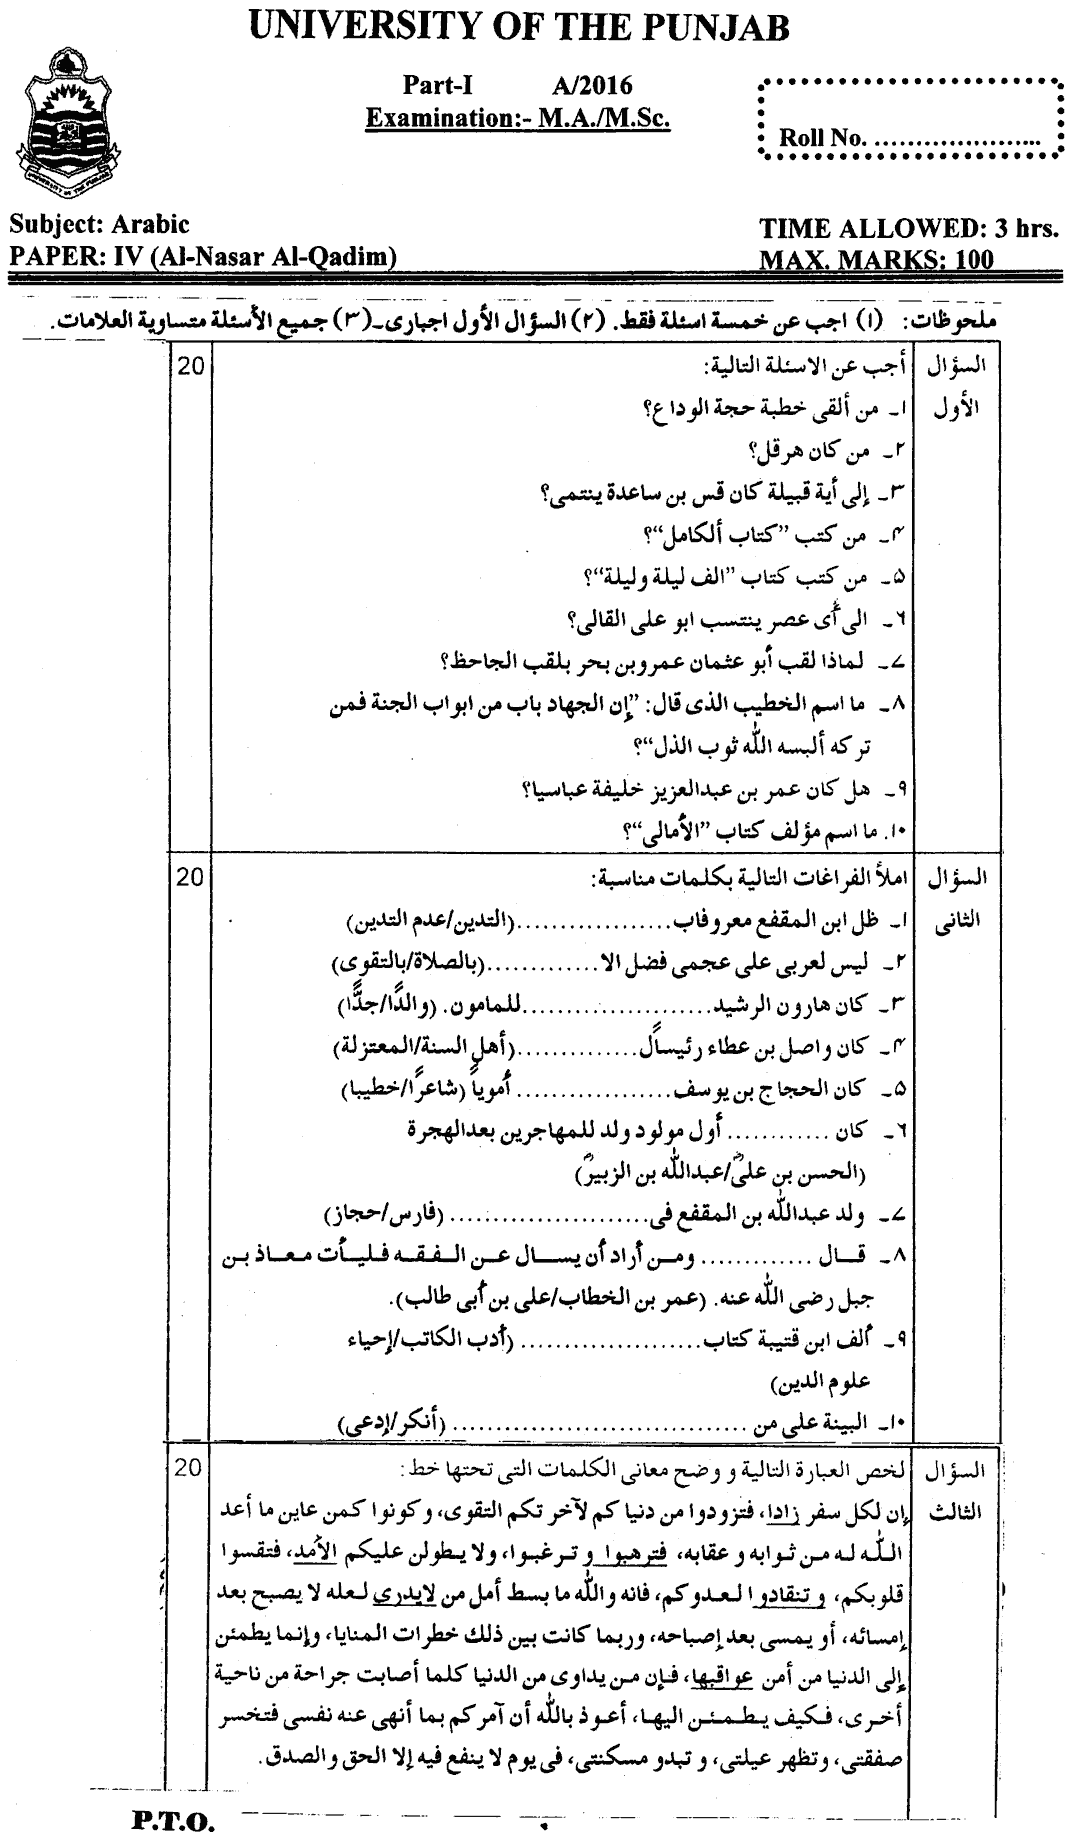 MA Part 1 Arabic Al Nasar Al Qadim Past Paper 2016 Punjab University